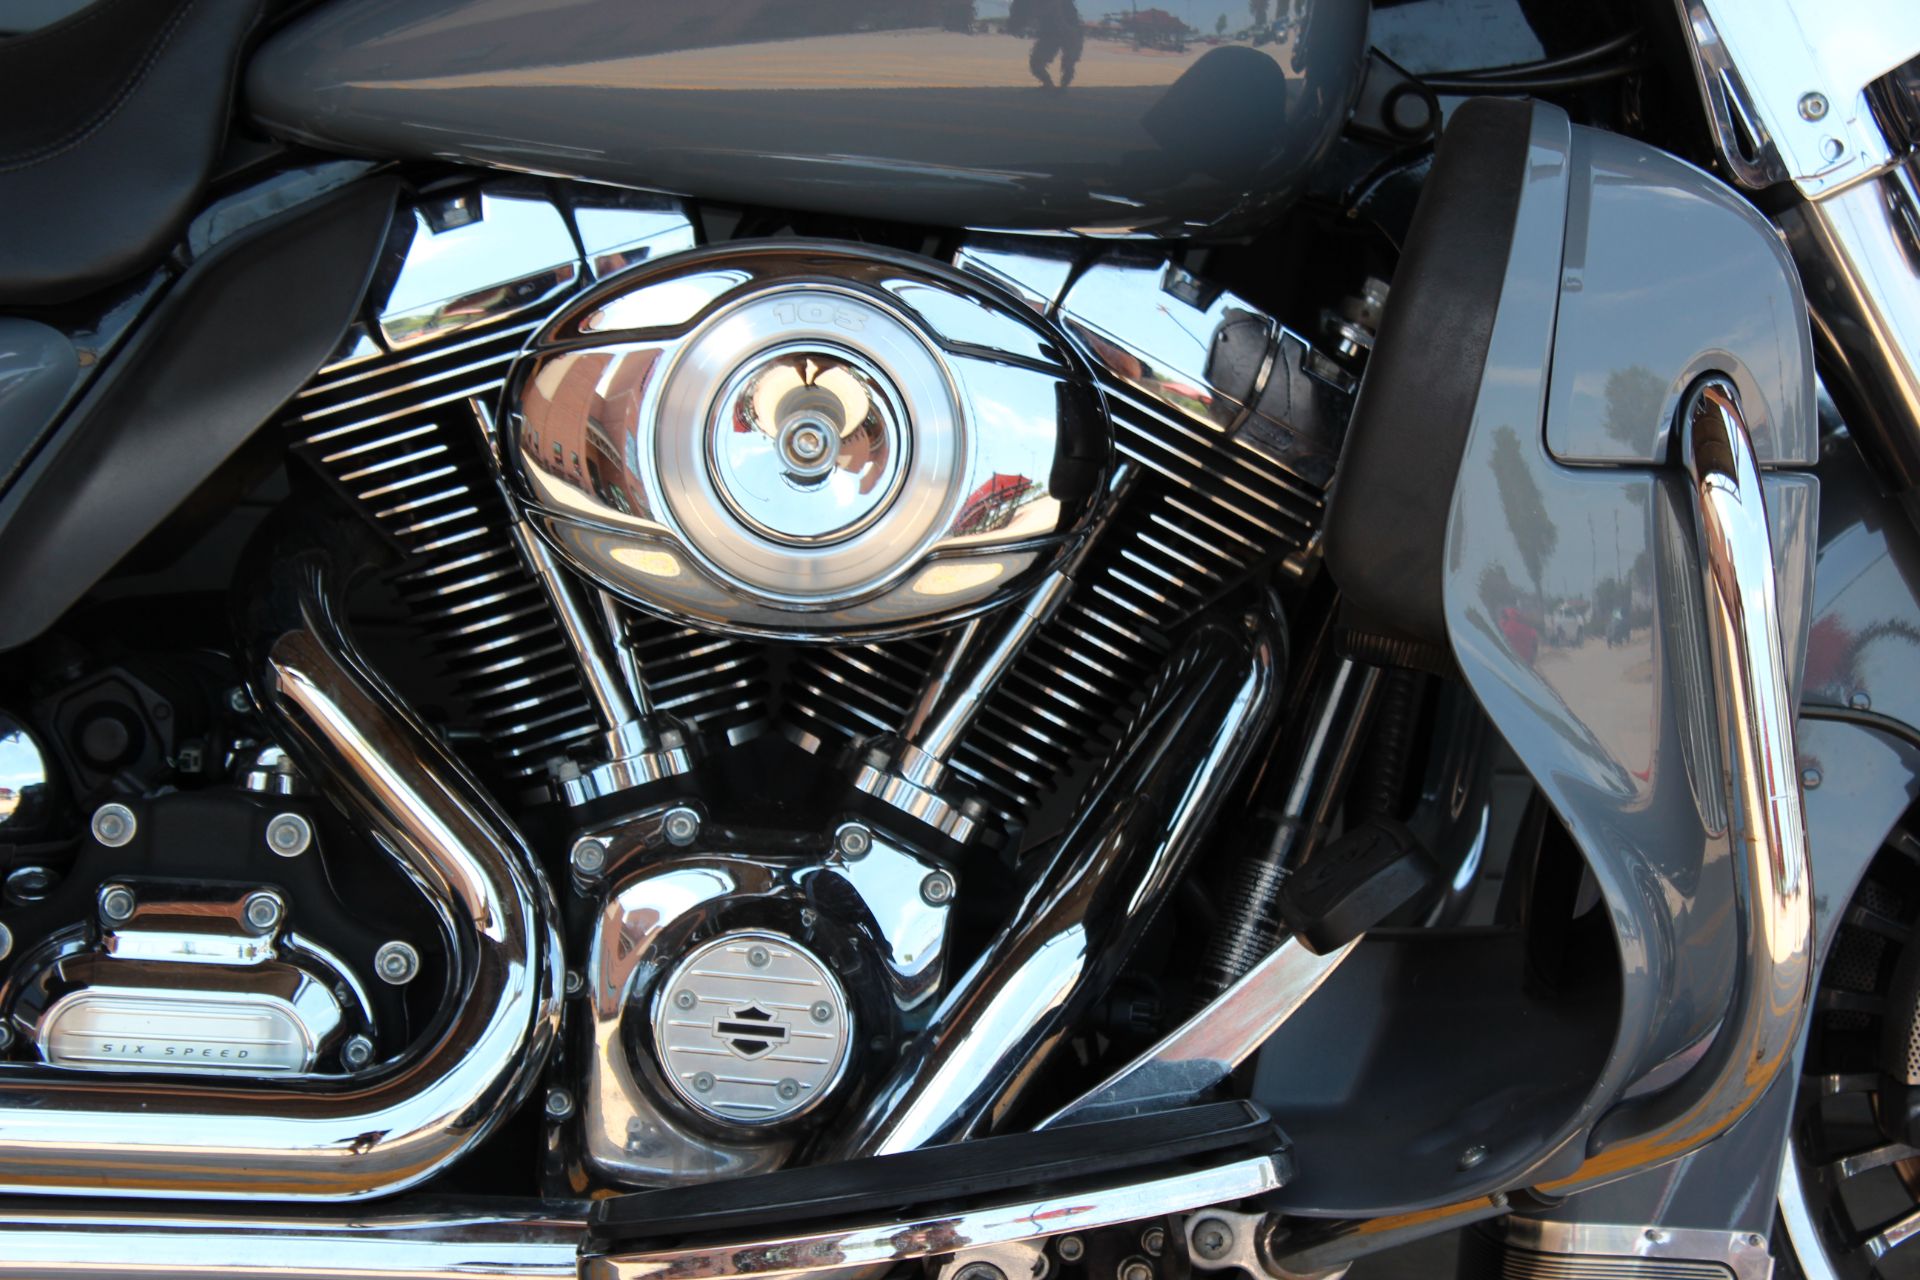 2013 Harley-Davidson Electra Glide® Ultra Limited in Carrollton, Texas - Photo 7